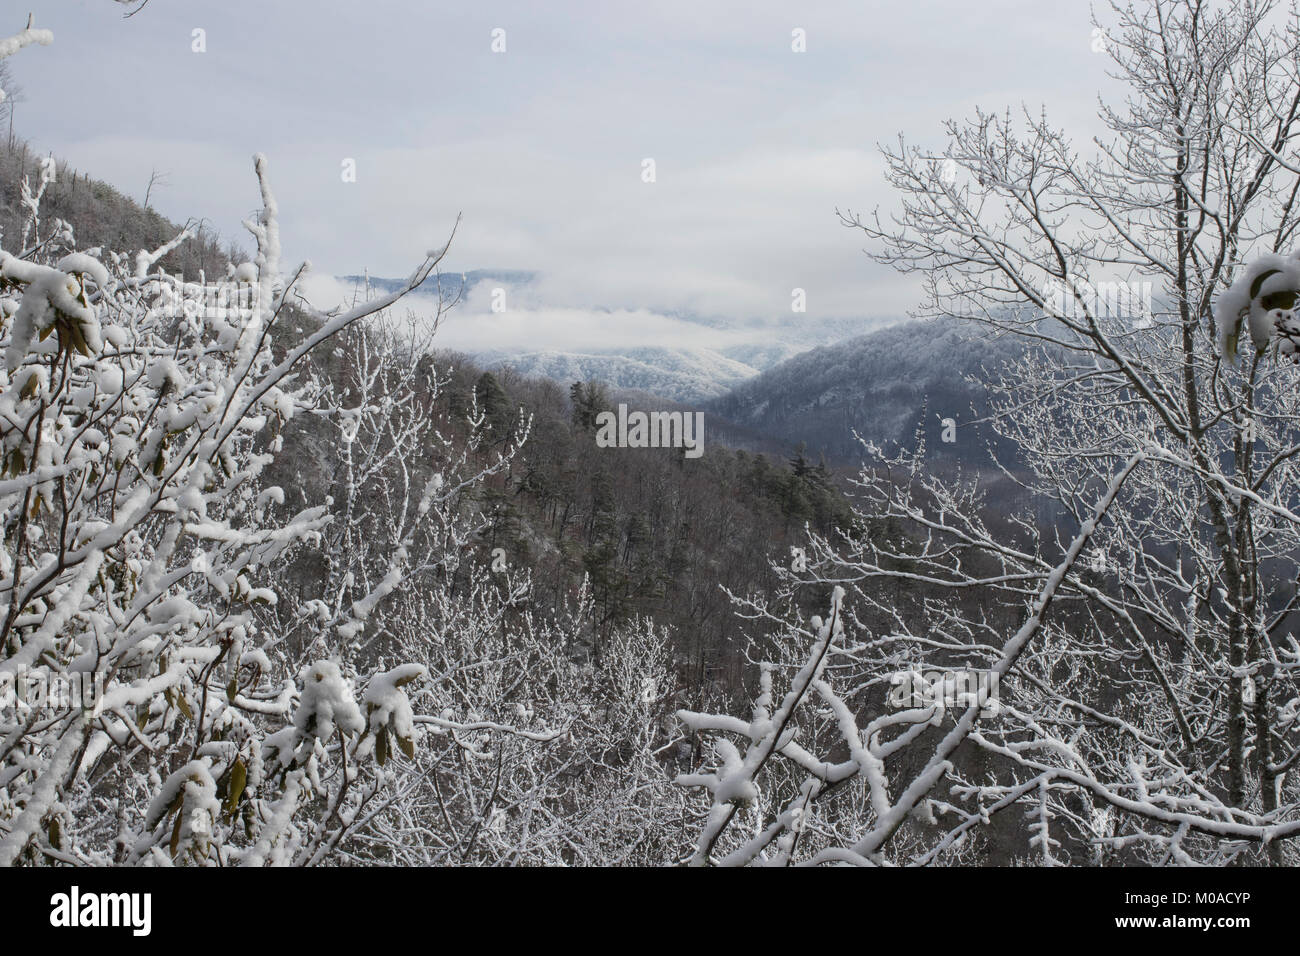 Snow covered landscape scene Stock Photo